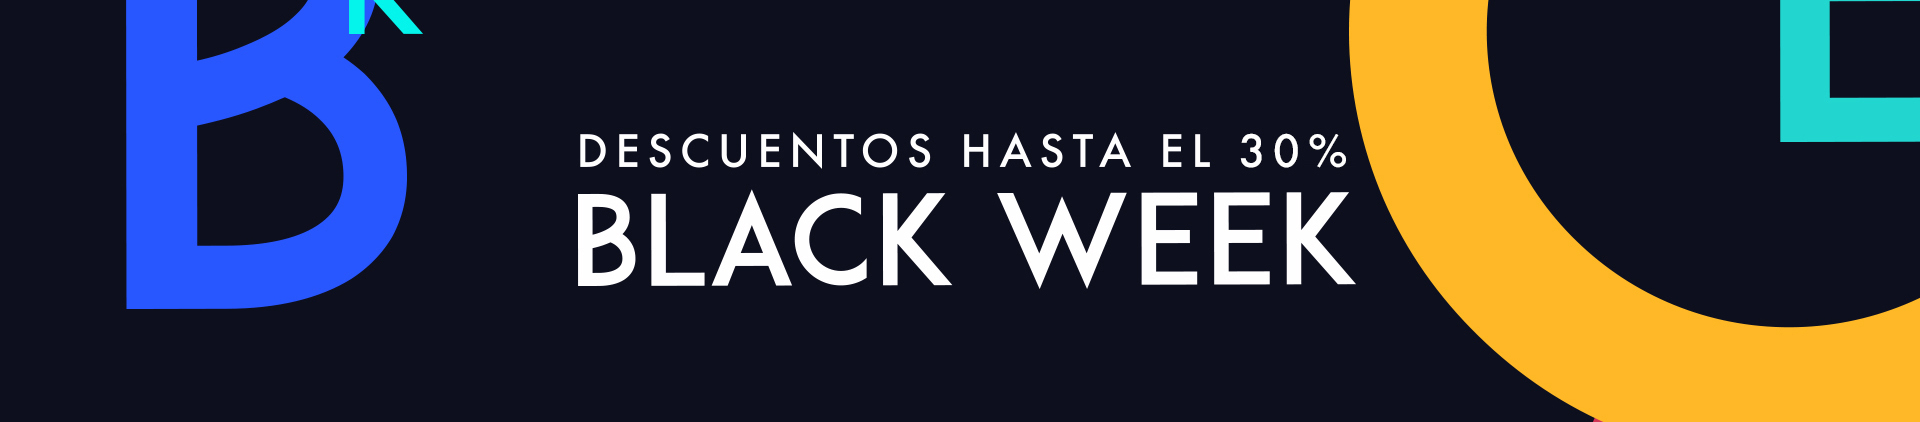 BLACK WEEK Descuentos